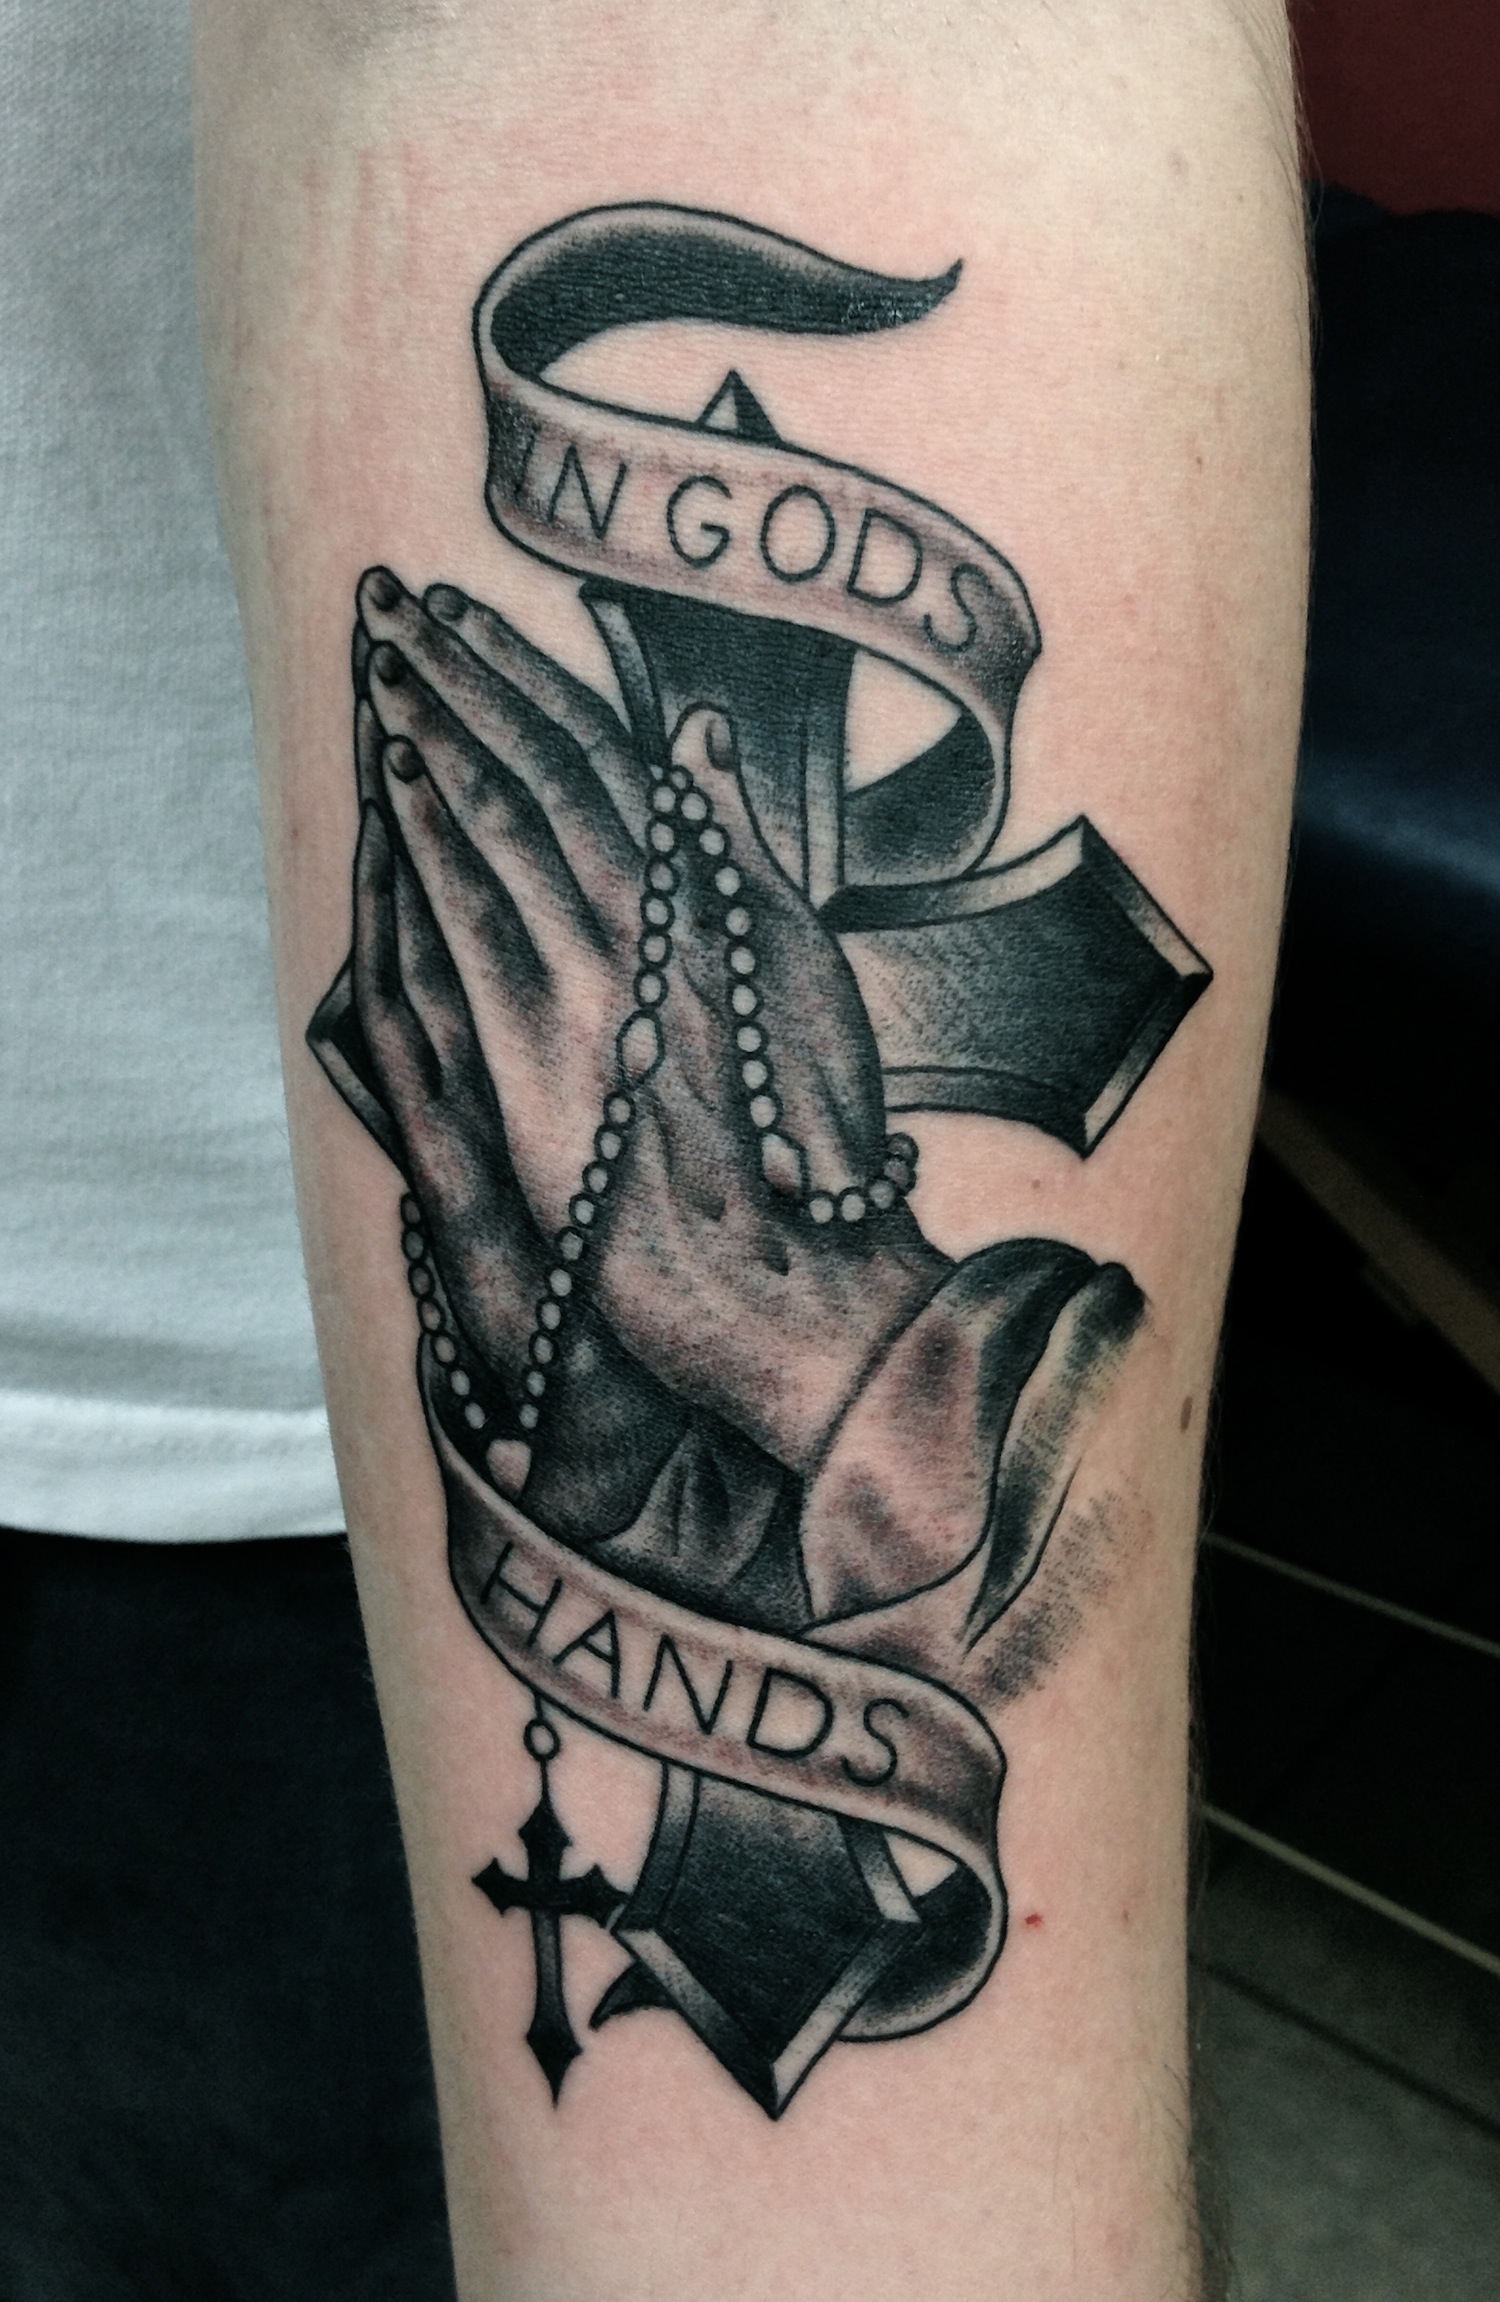 The Lord's Prayer Tattoo